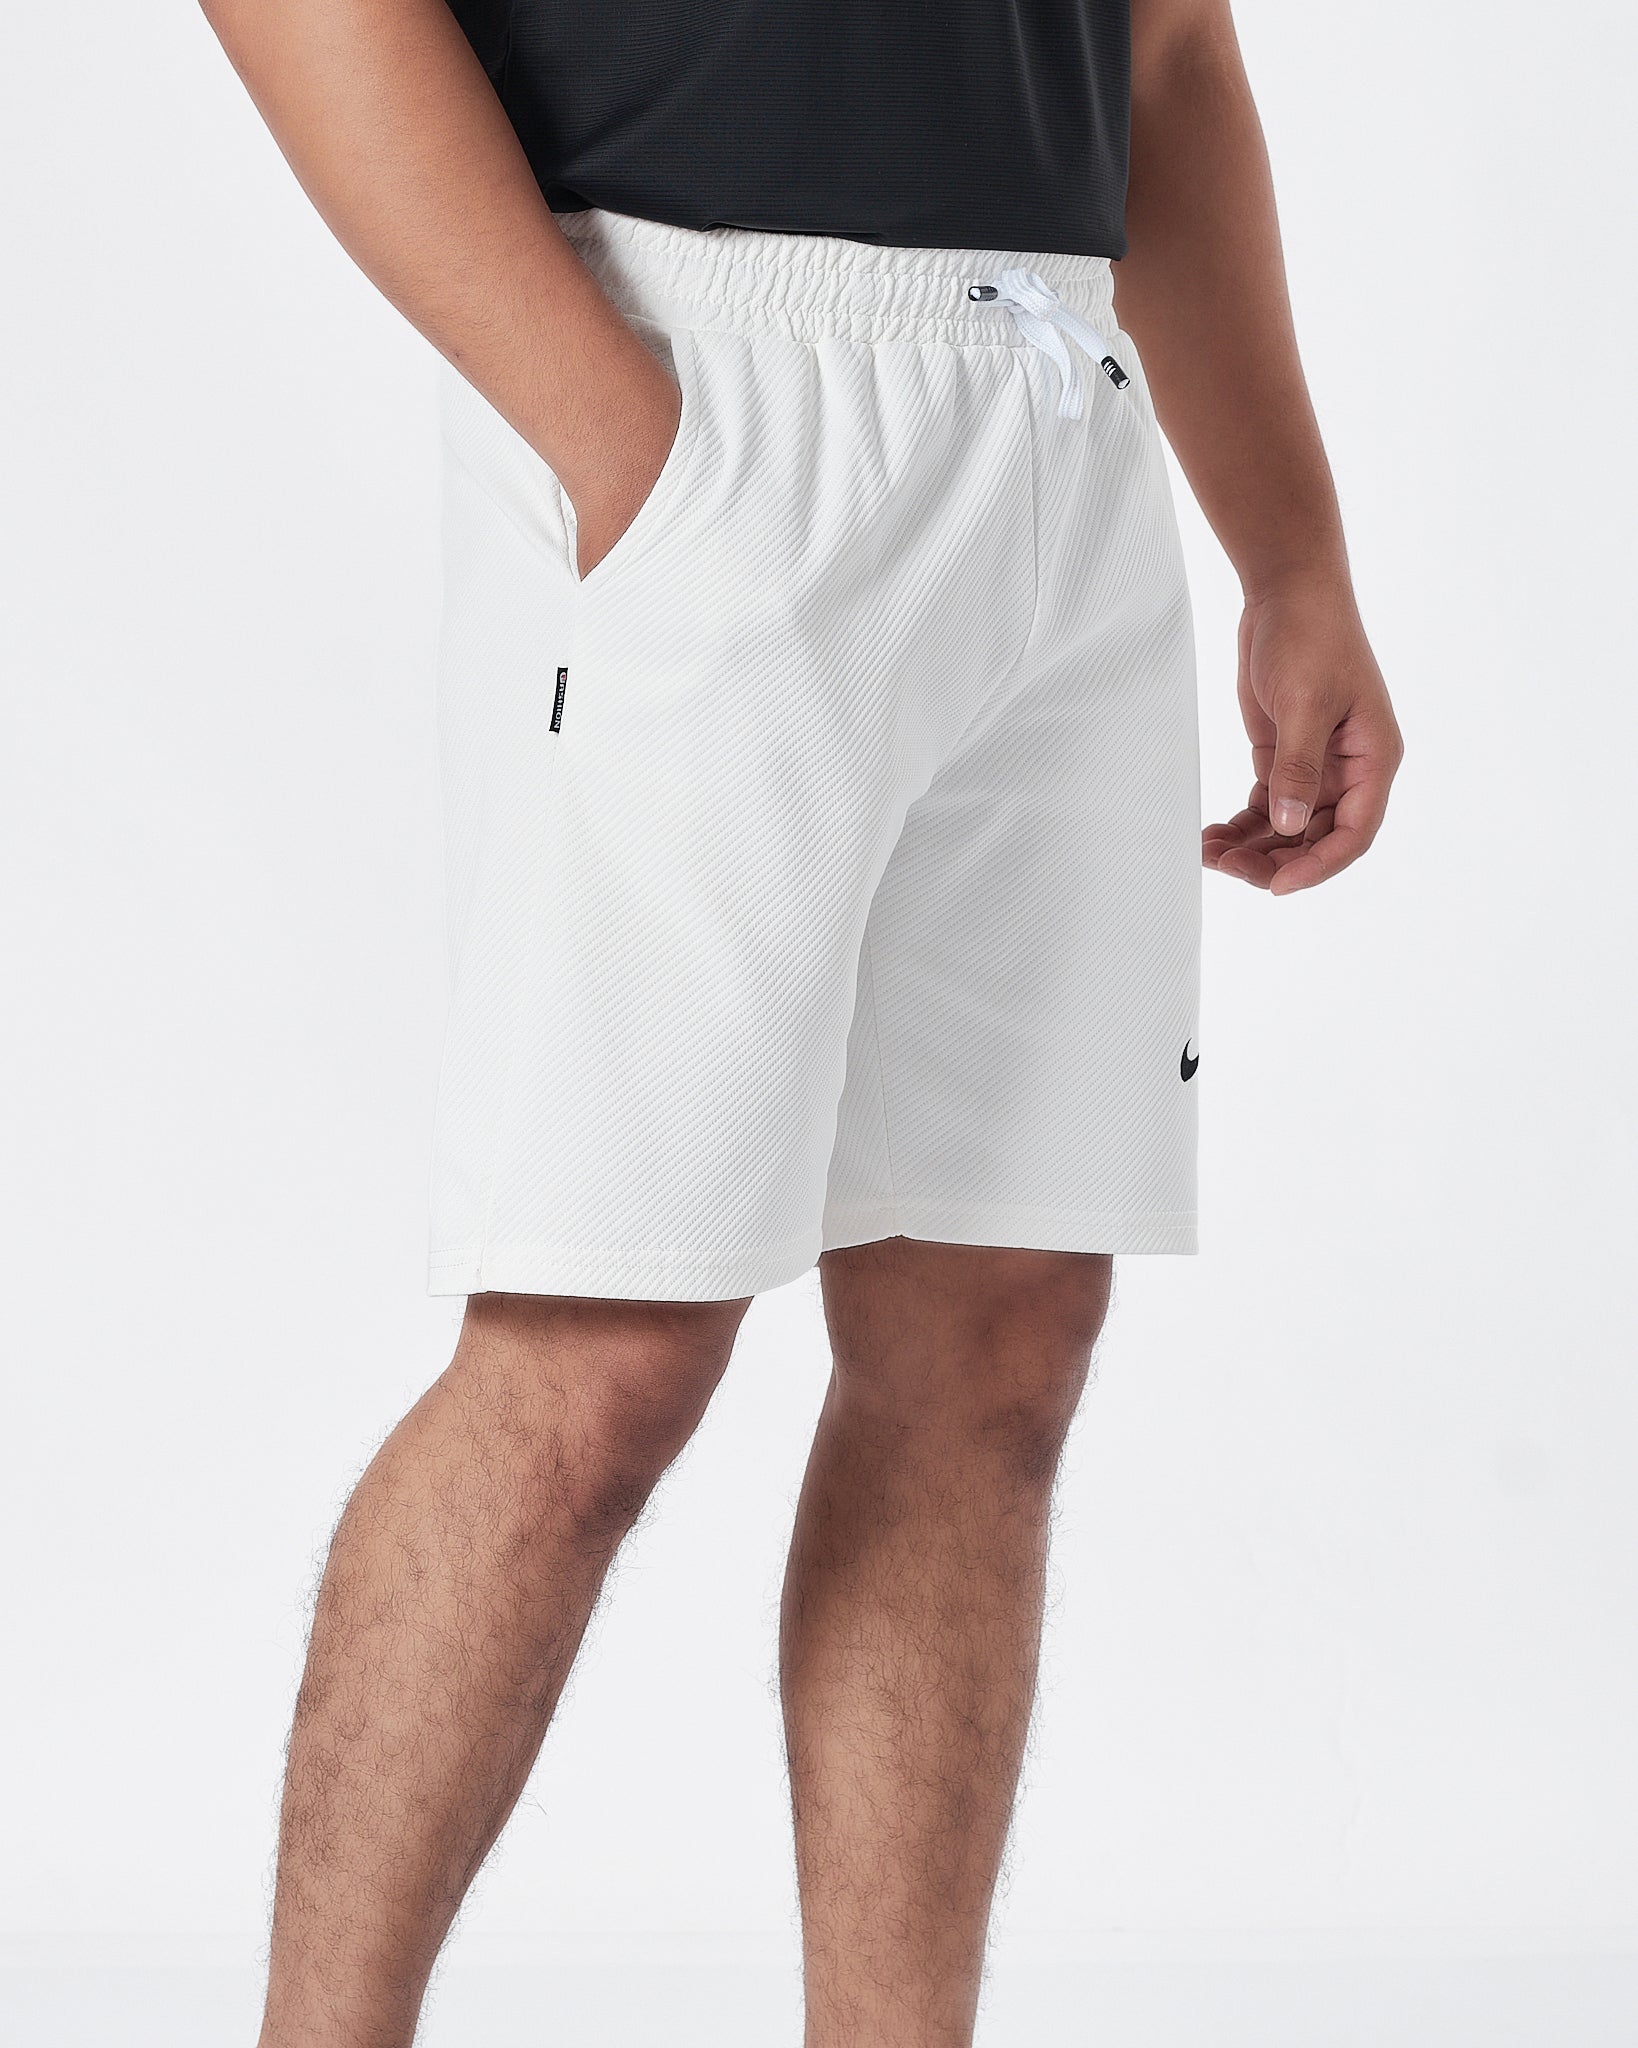 NIK Swooh Logo Printed Men White Track Shorts 13.90